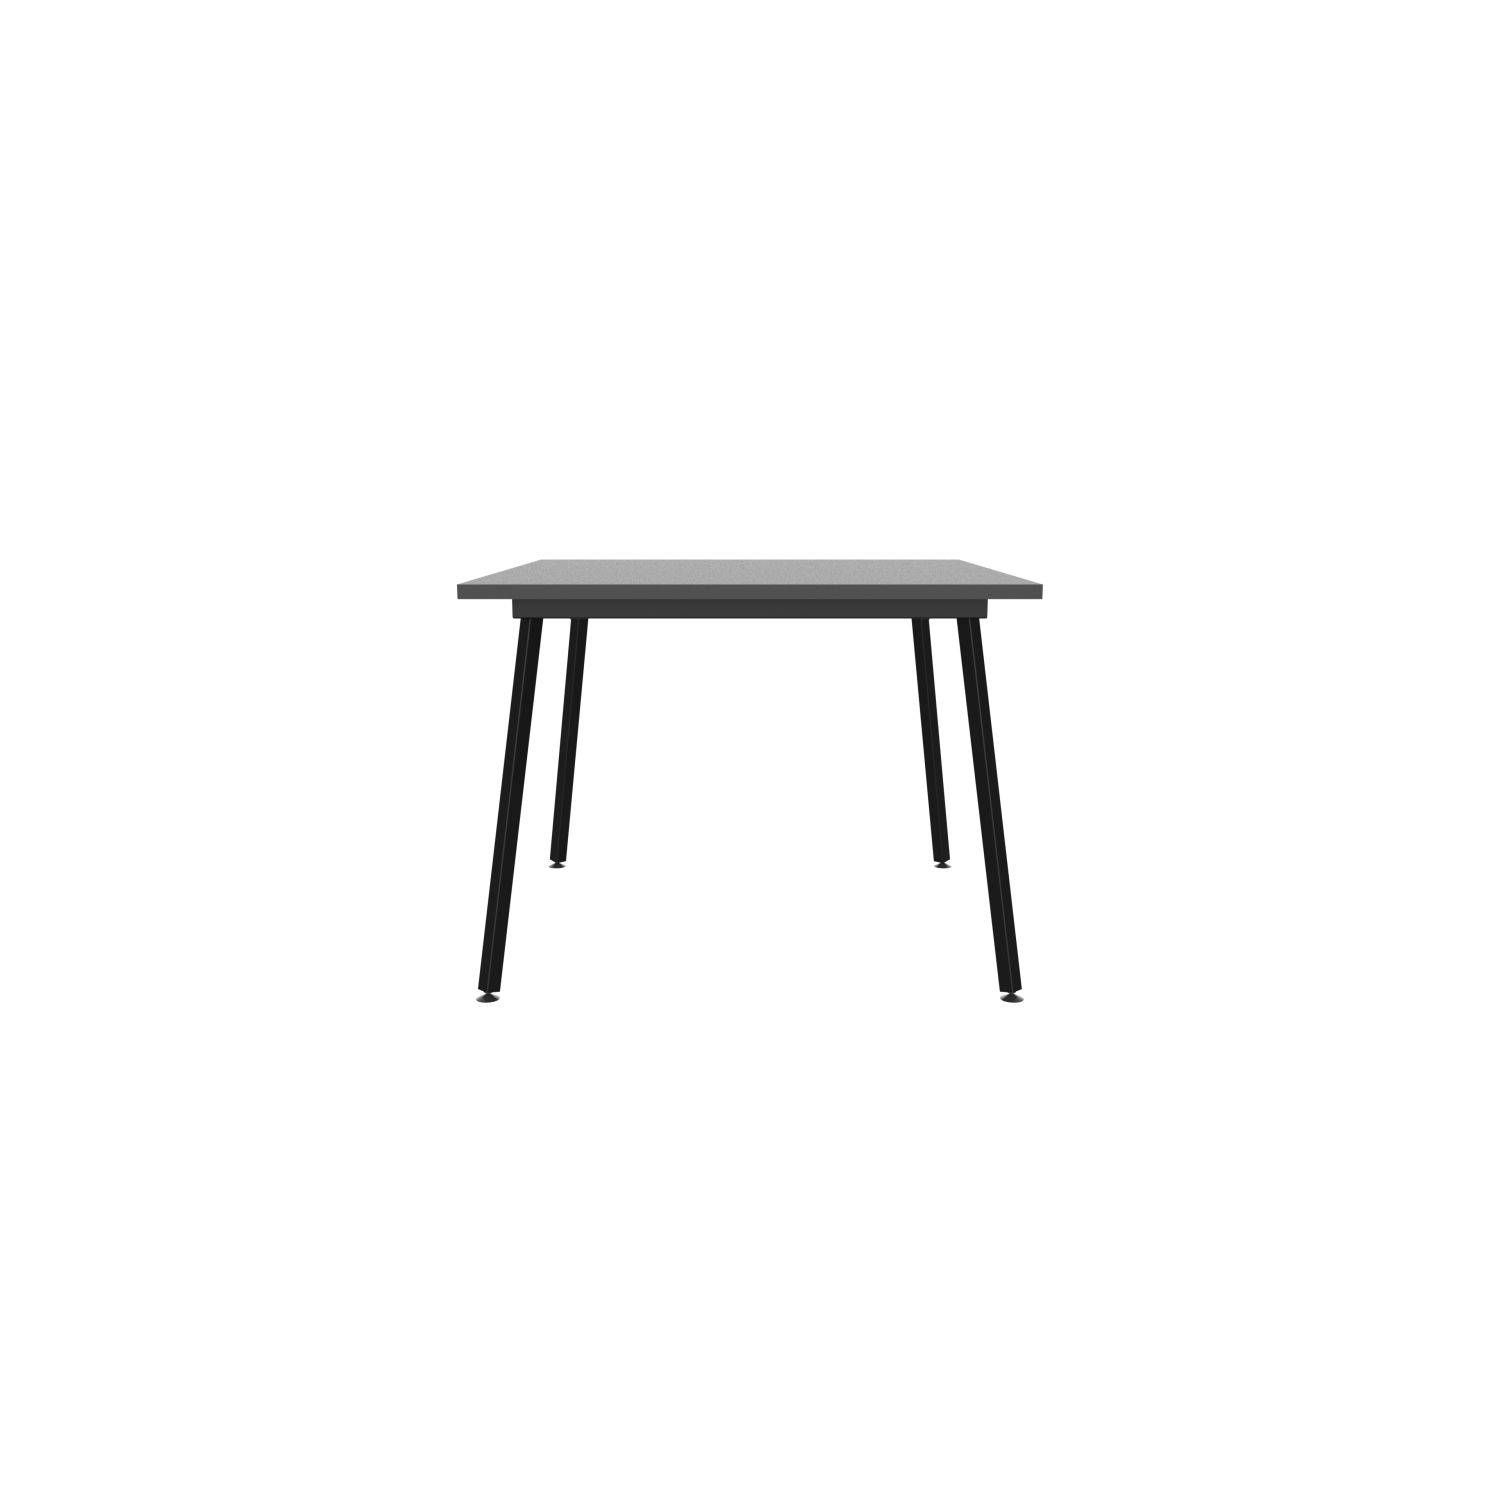 lensvelt maarten baas table fixed height 100x100 table top 26 mm top melamine black edge abs black black frame ral9005